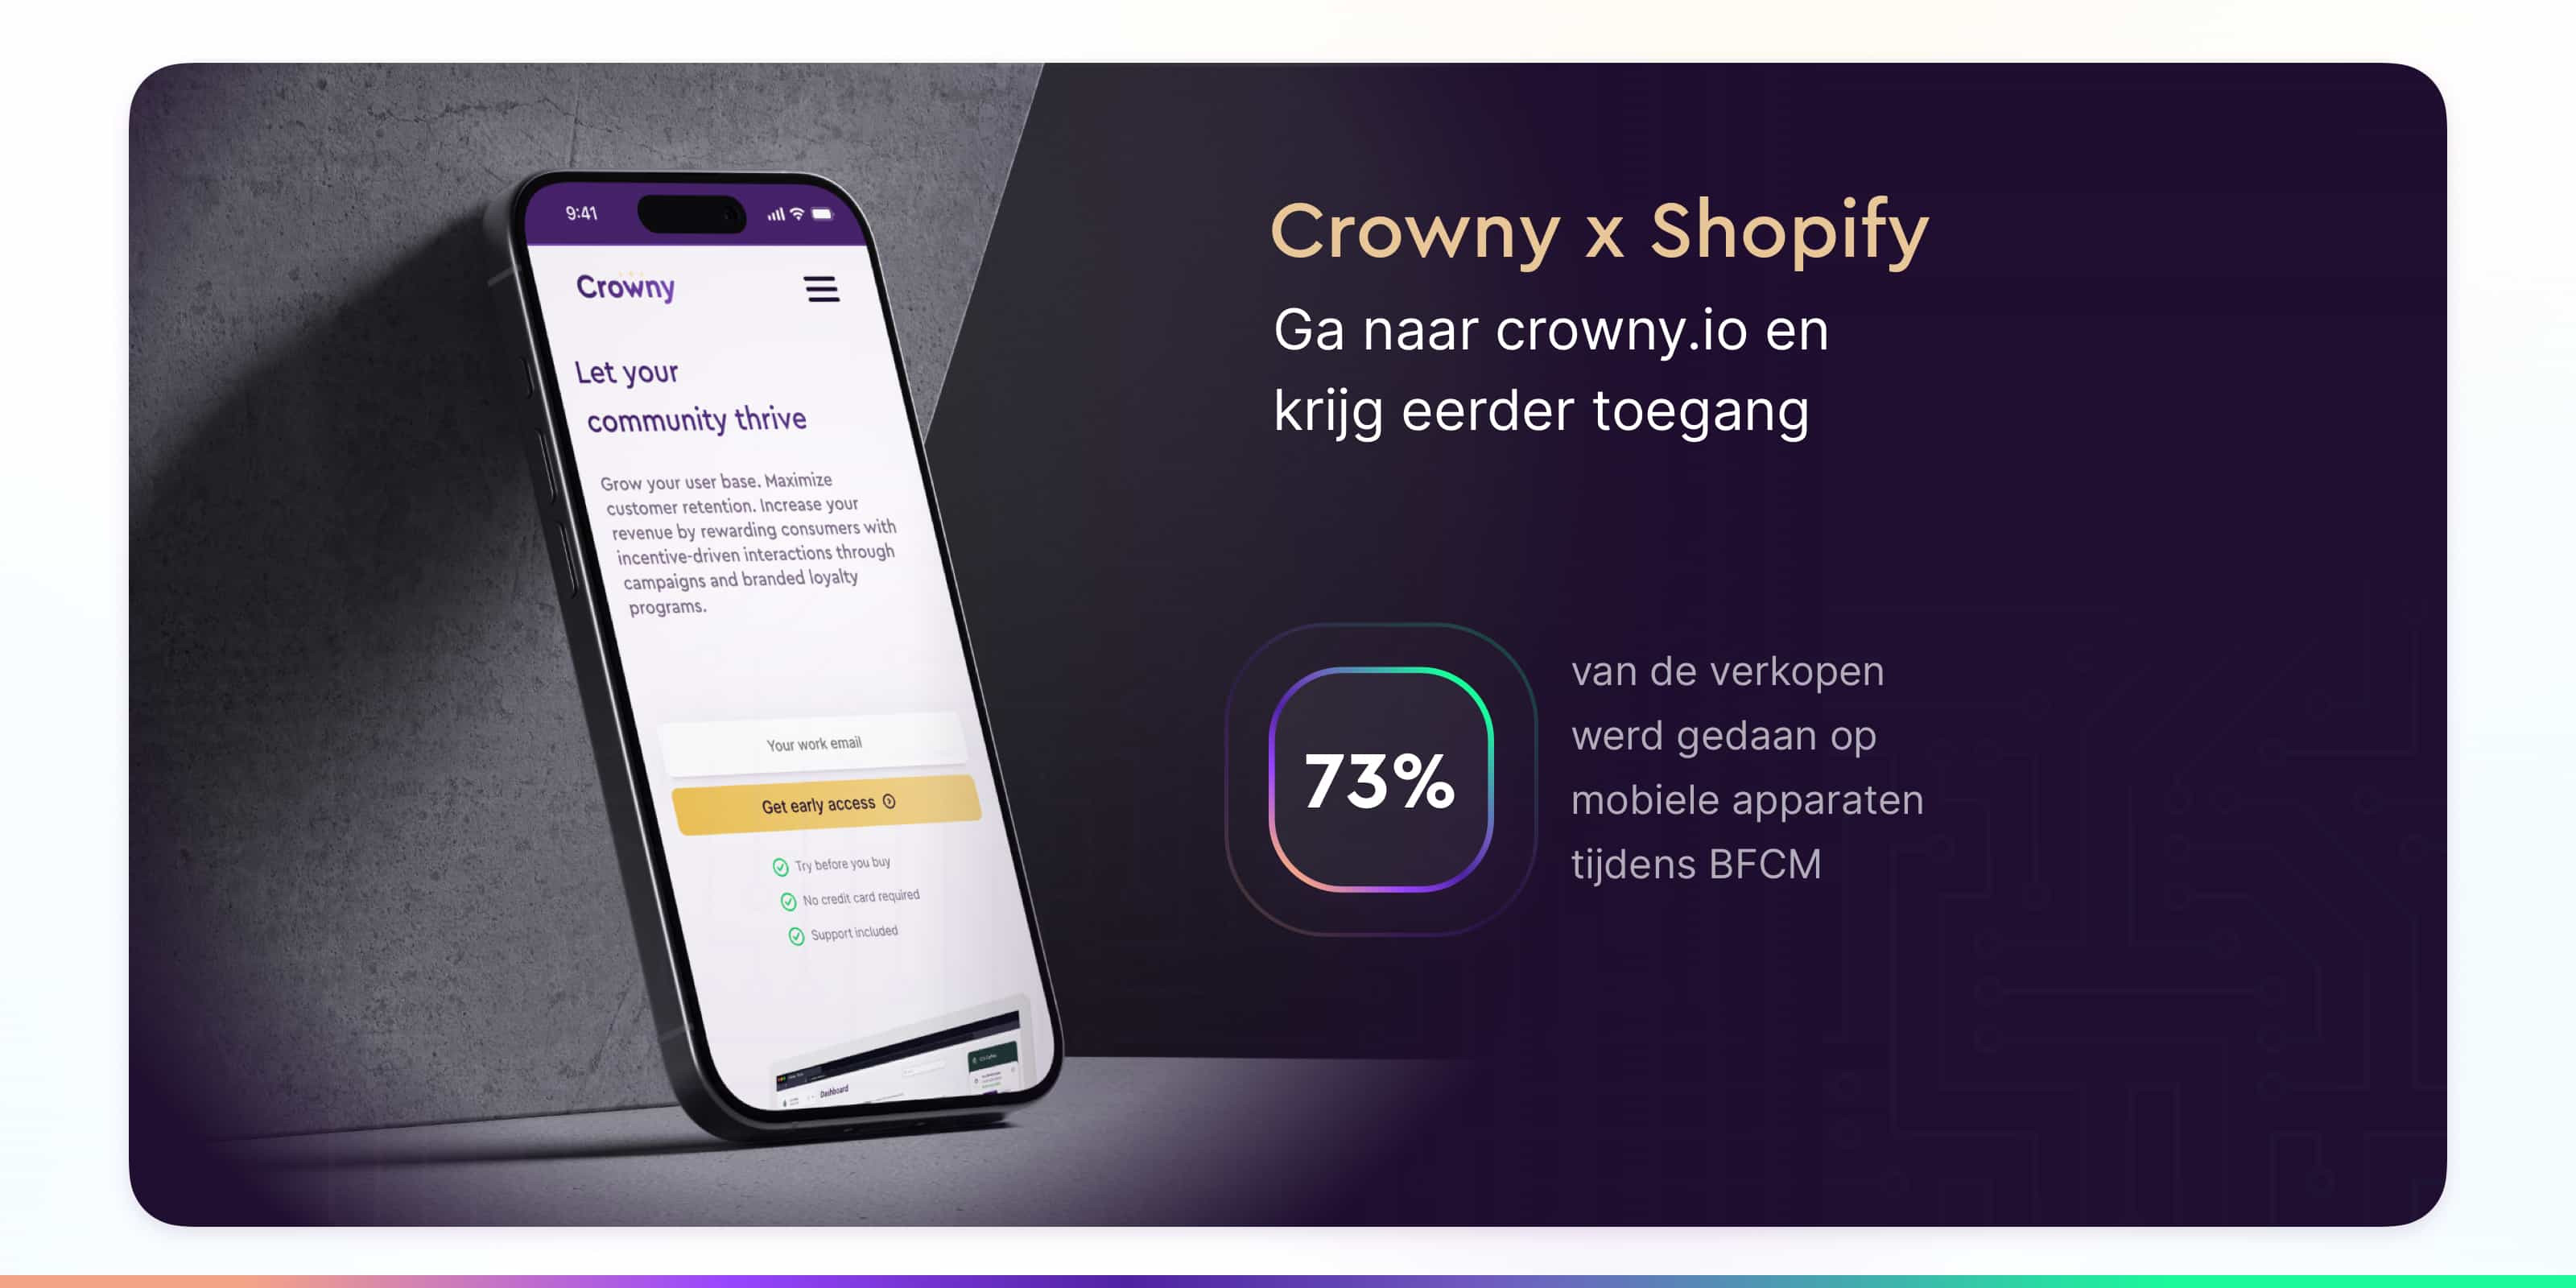 crowny x shopify - krijg eerder toegang